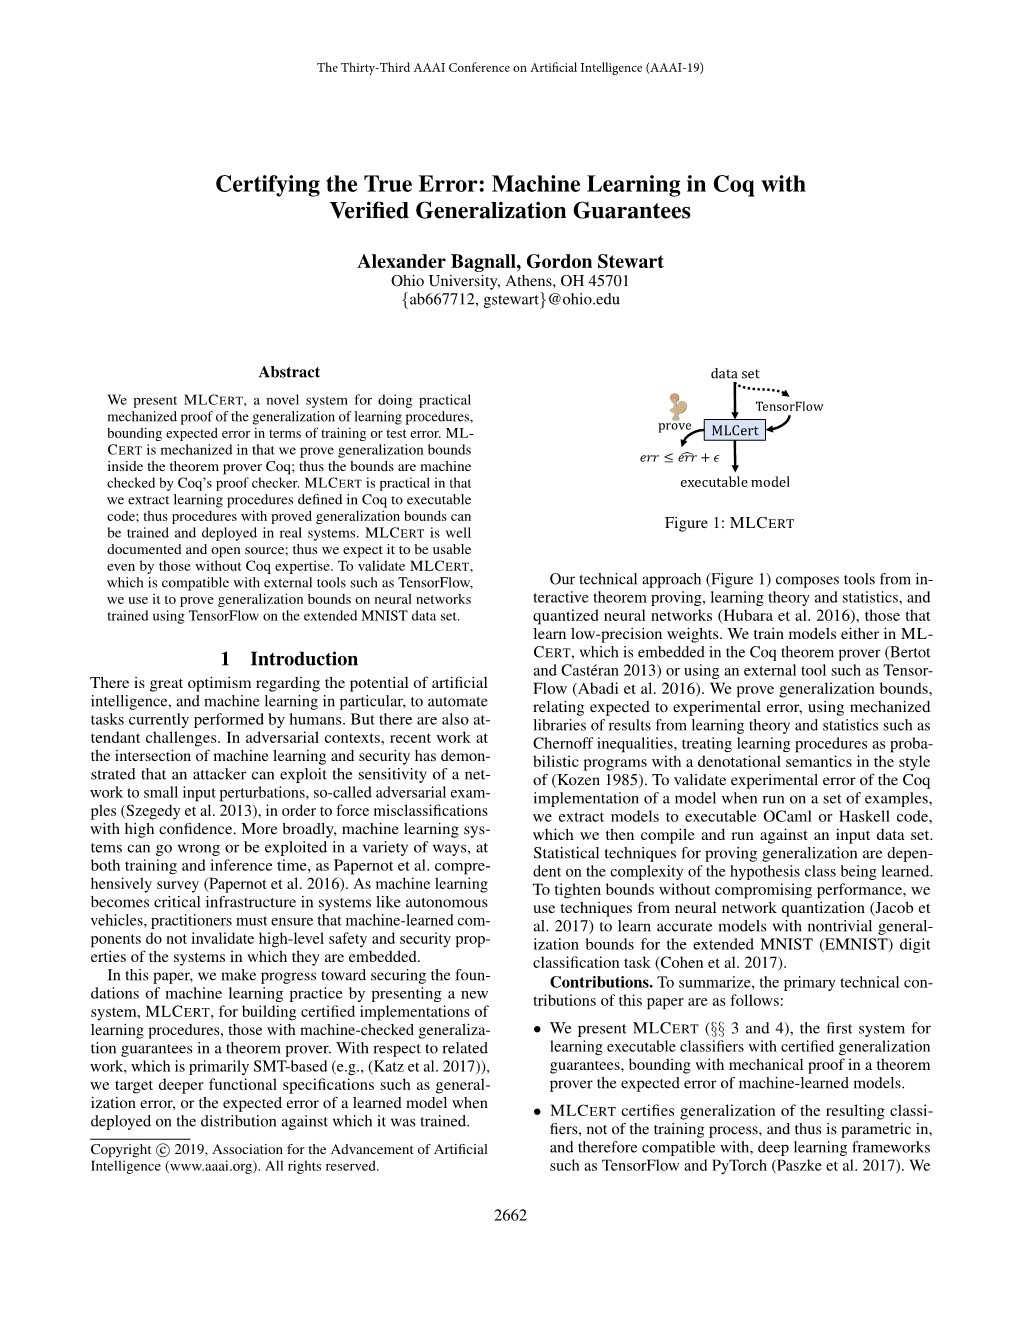 Machine Learning in Coq with Verified Generalization Guarantees